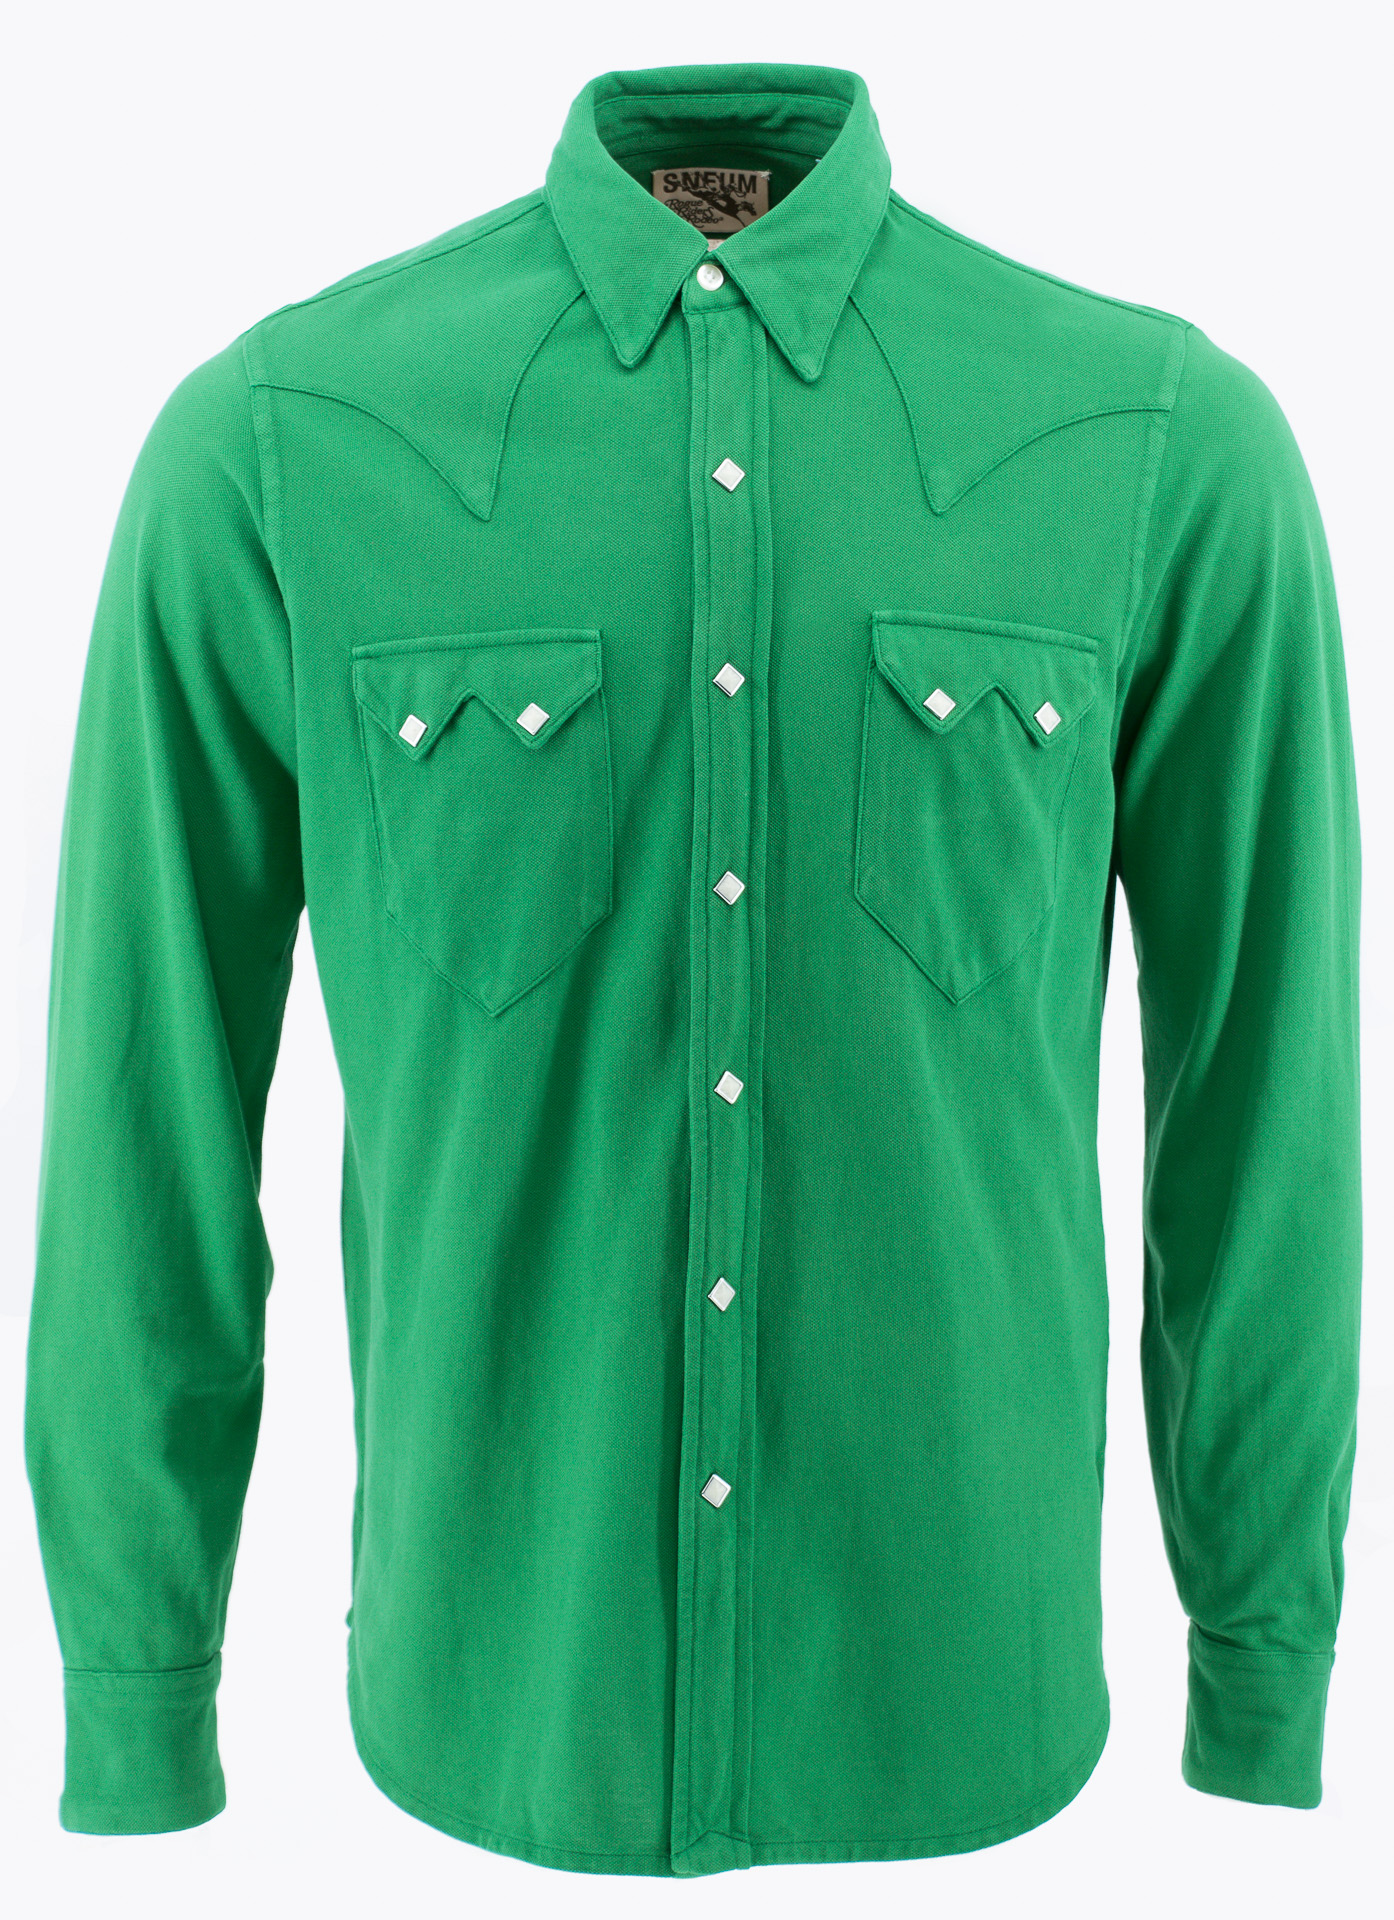 Sawtooth western shirt in 100% oranic cotton pique